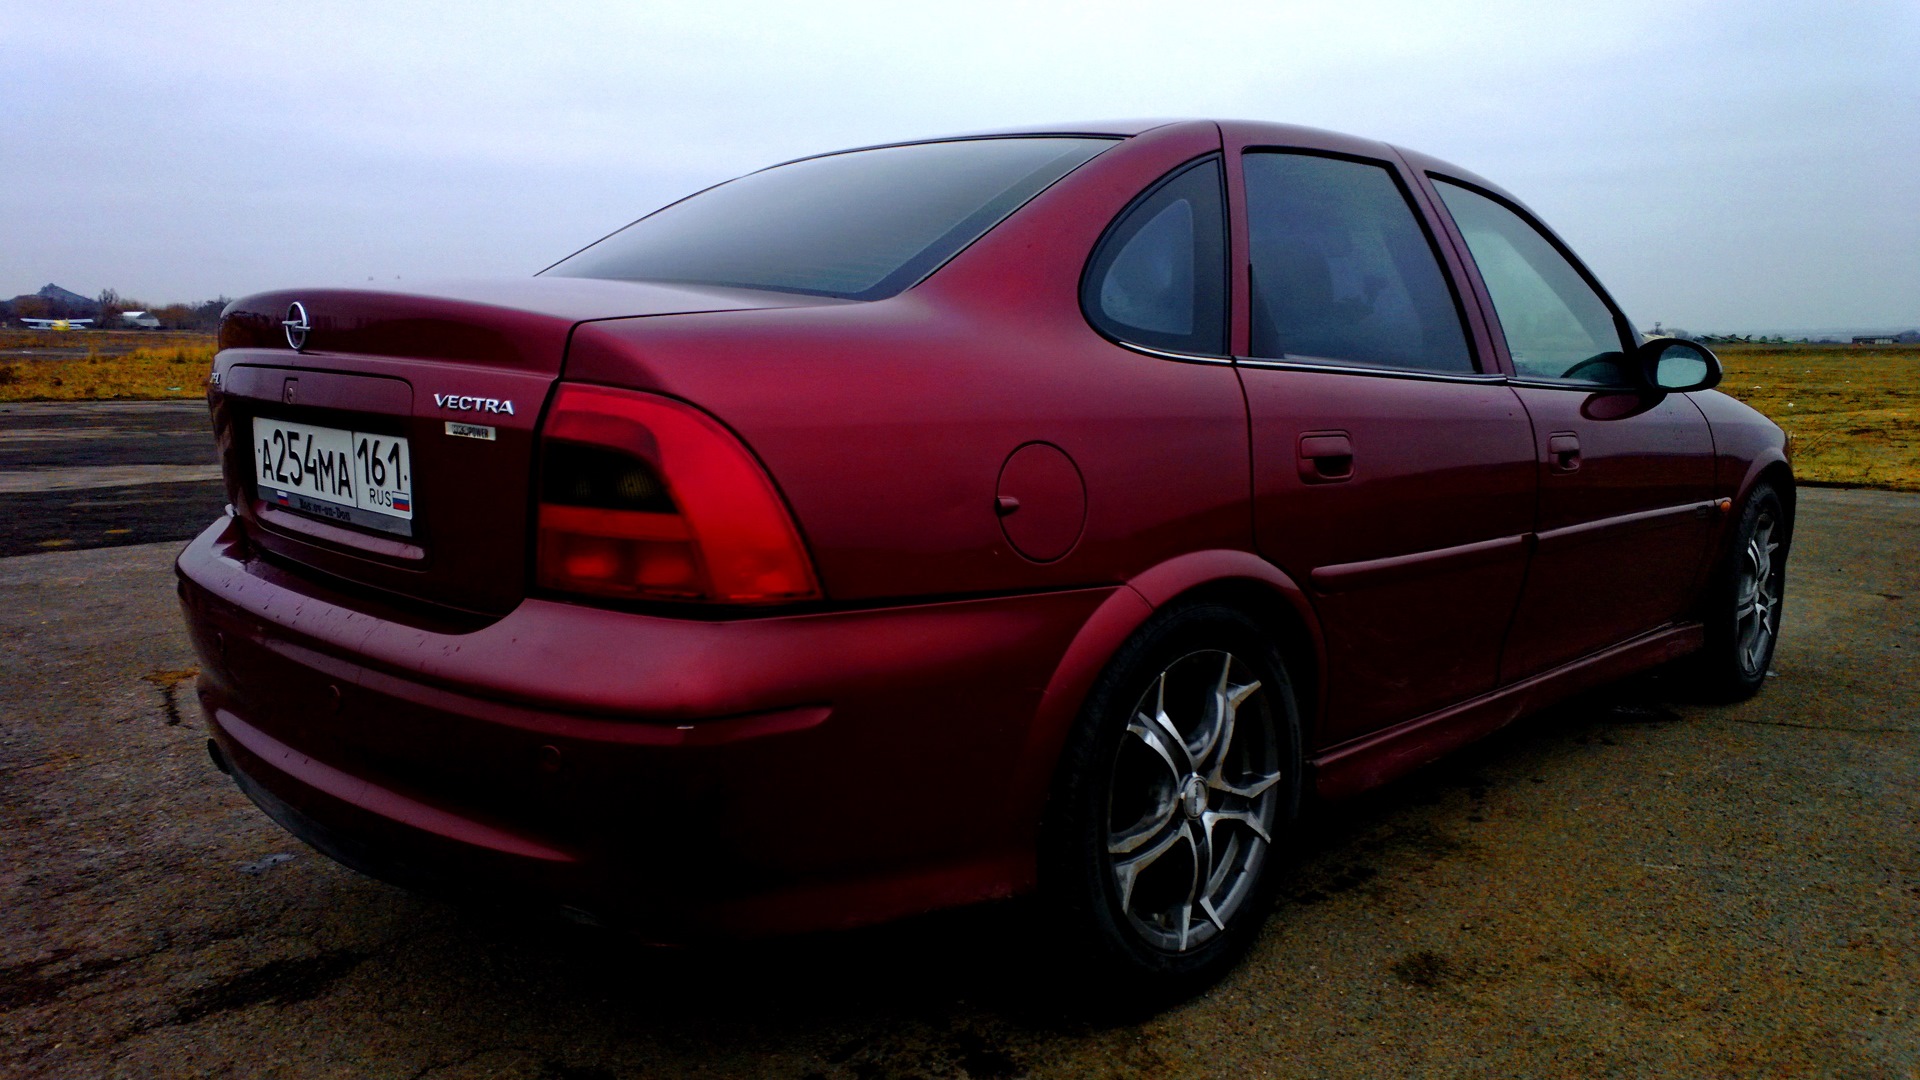 2001 Opel Vectra b 2.2. Опель Вектра б Вишневая. Opel Vectra b красный. Опель Вектра б красный. Отзыв вектра б